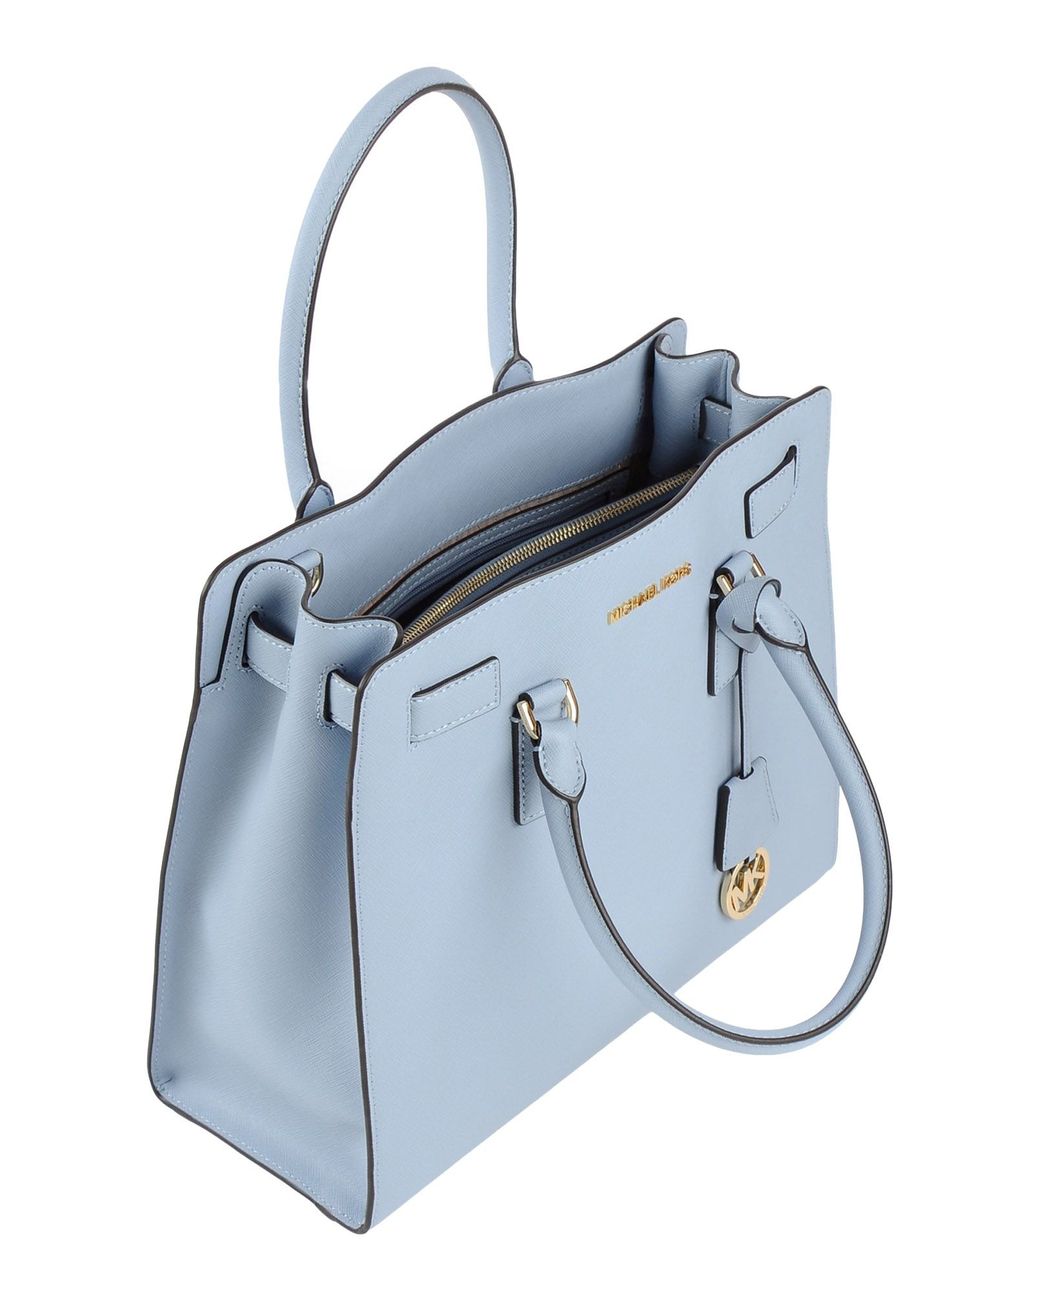 Women's Handbags, Purses & Luggage | Michael Kors